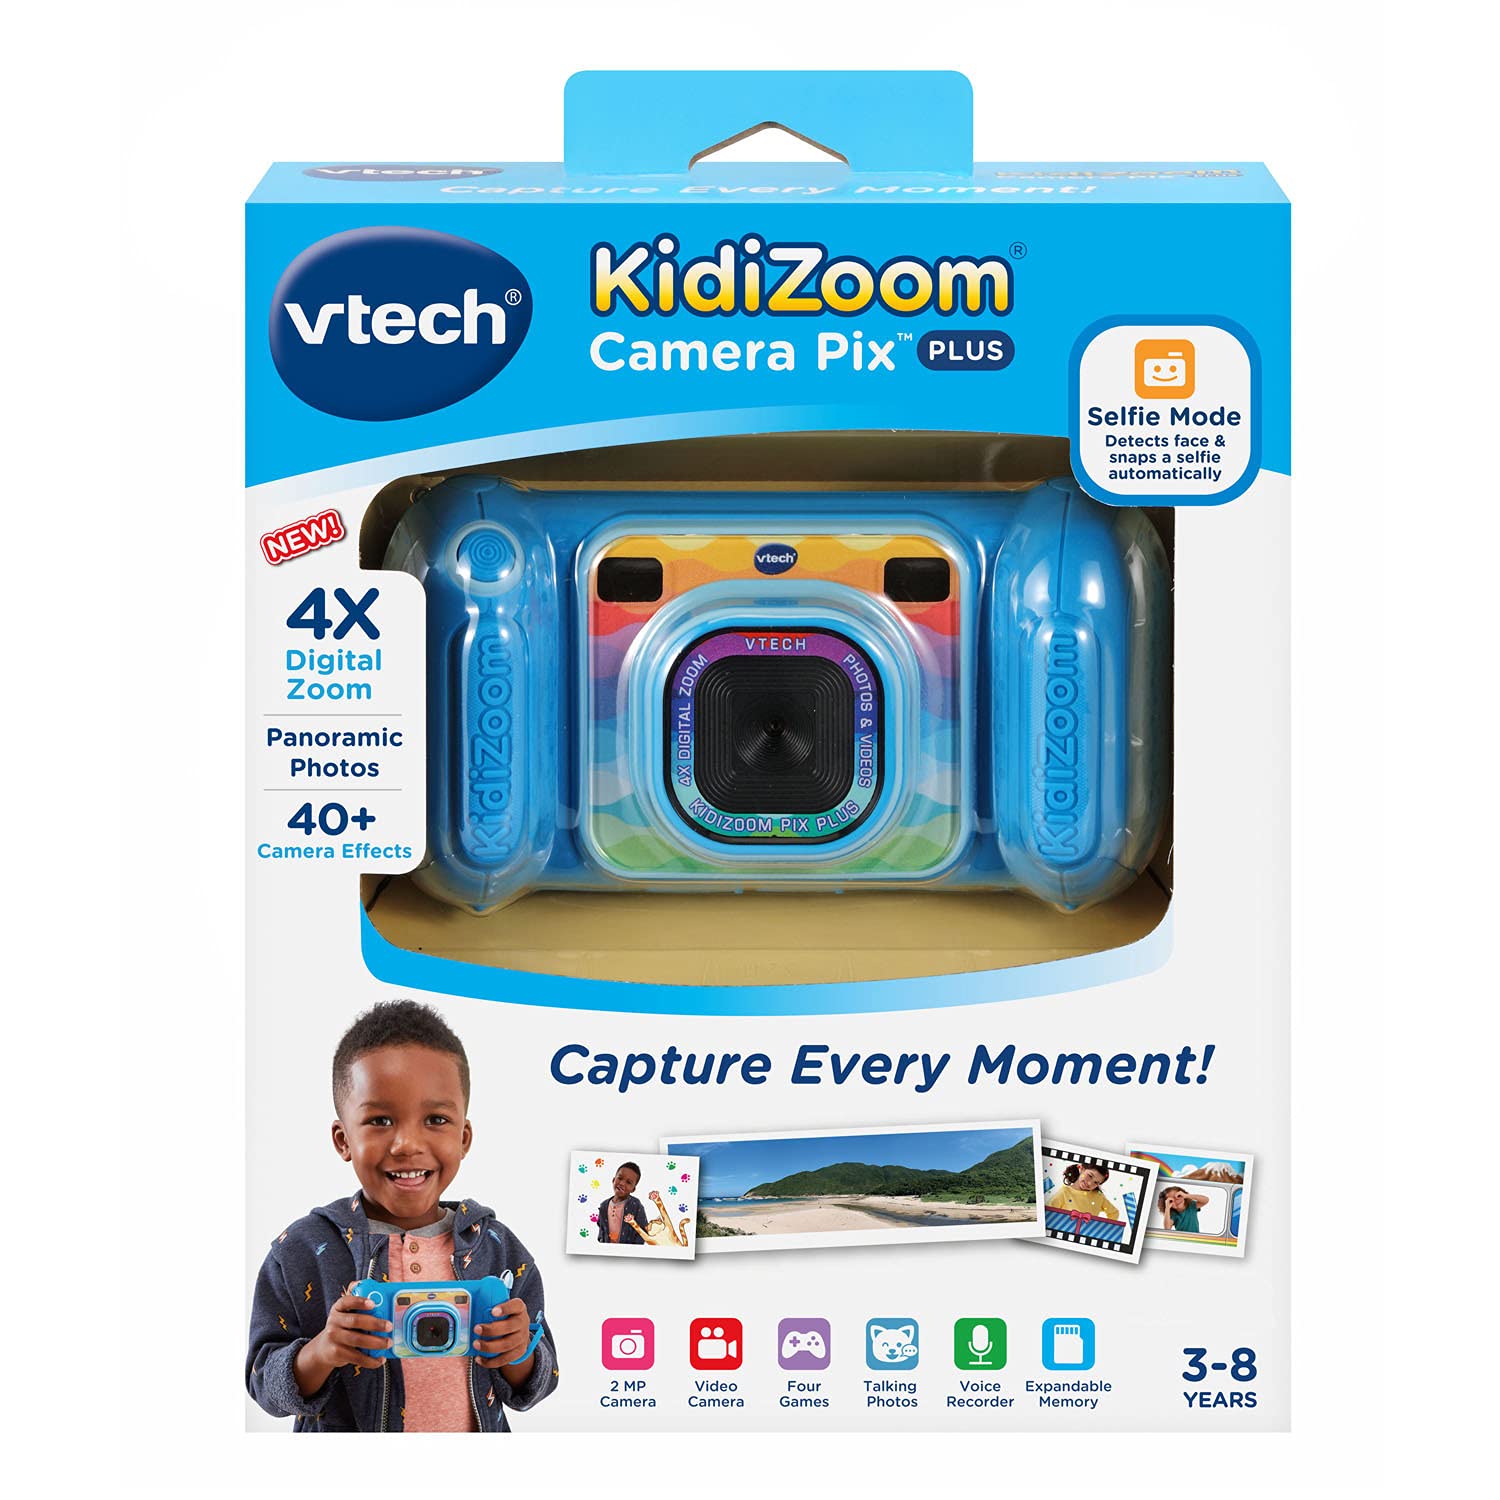 VTech KidiZoom Camera Pix Plus, Blue